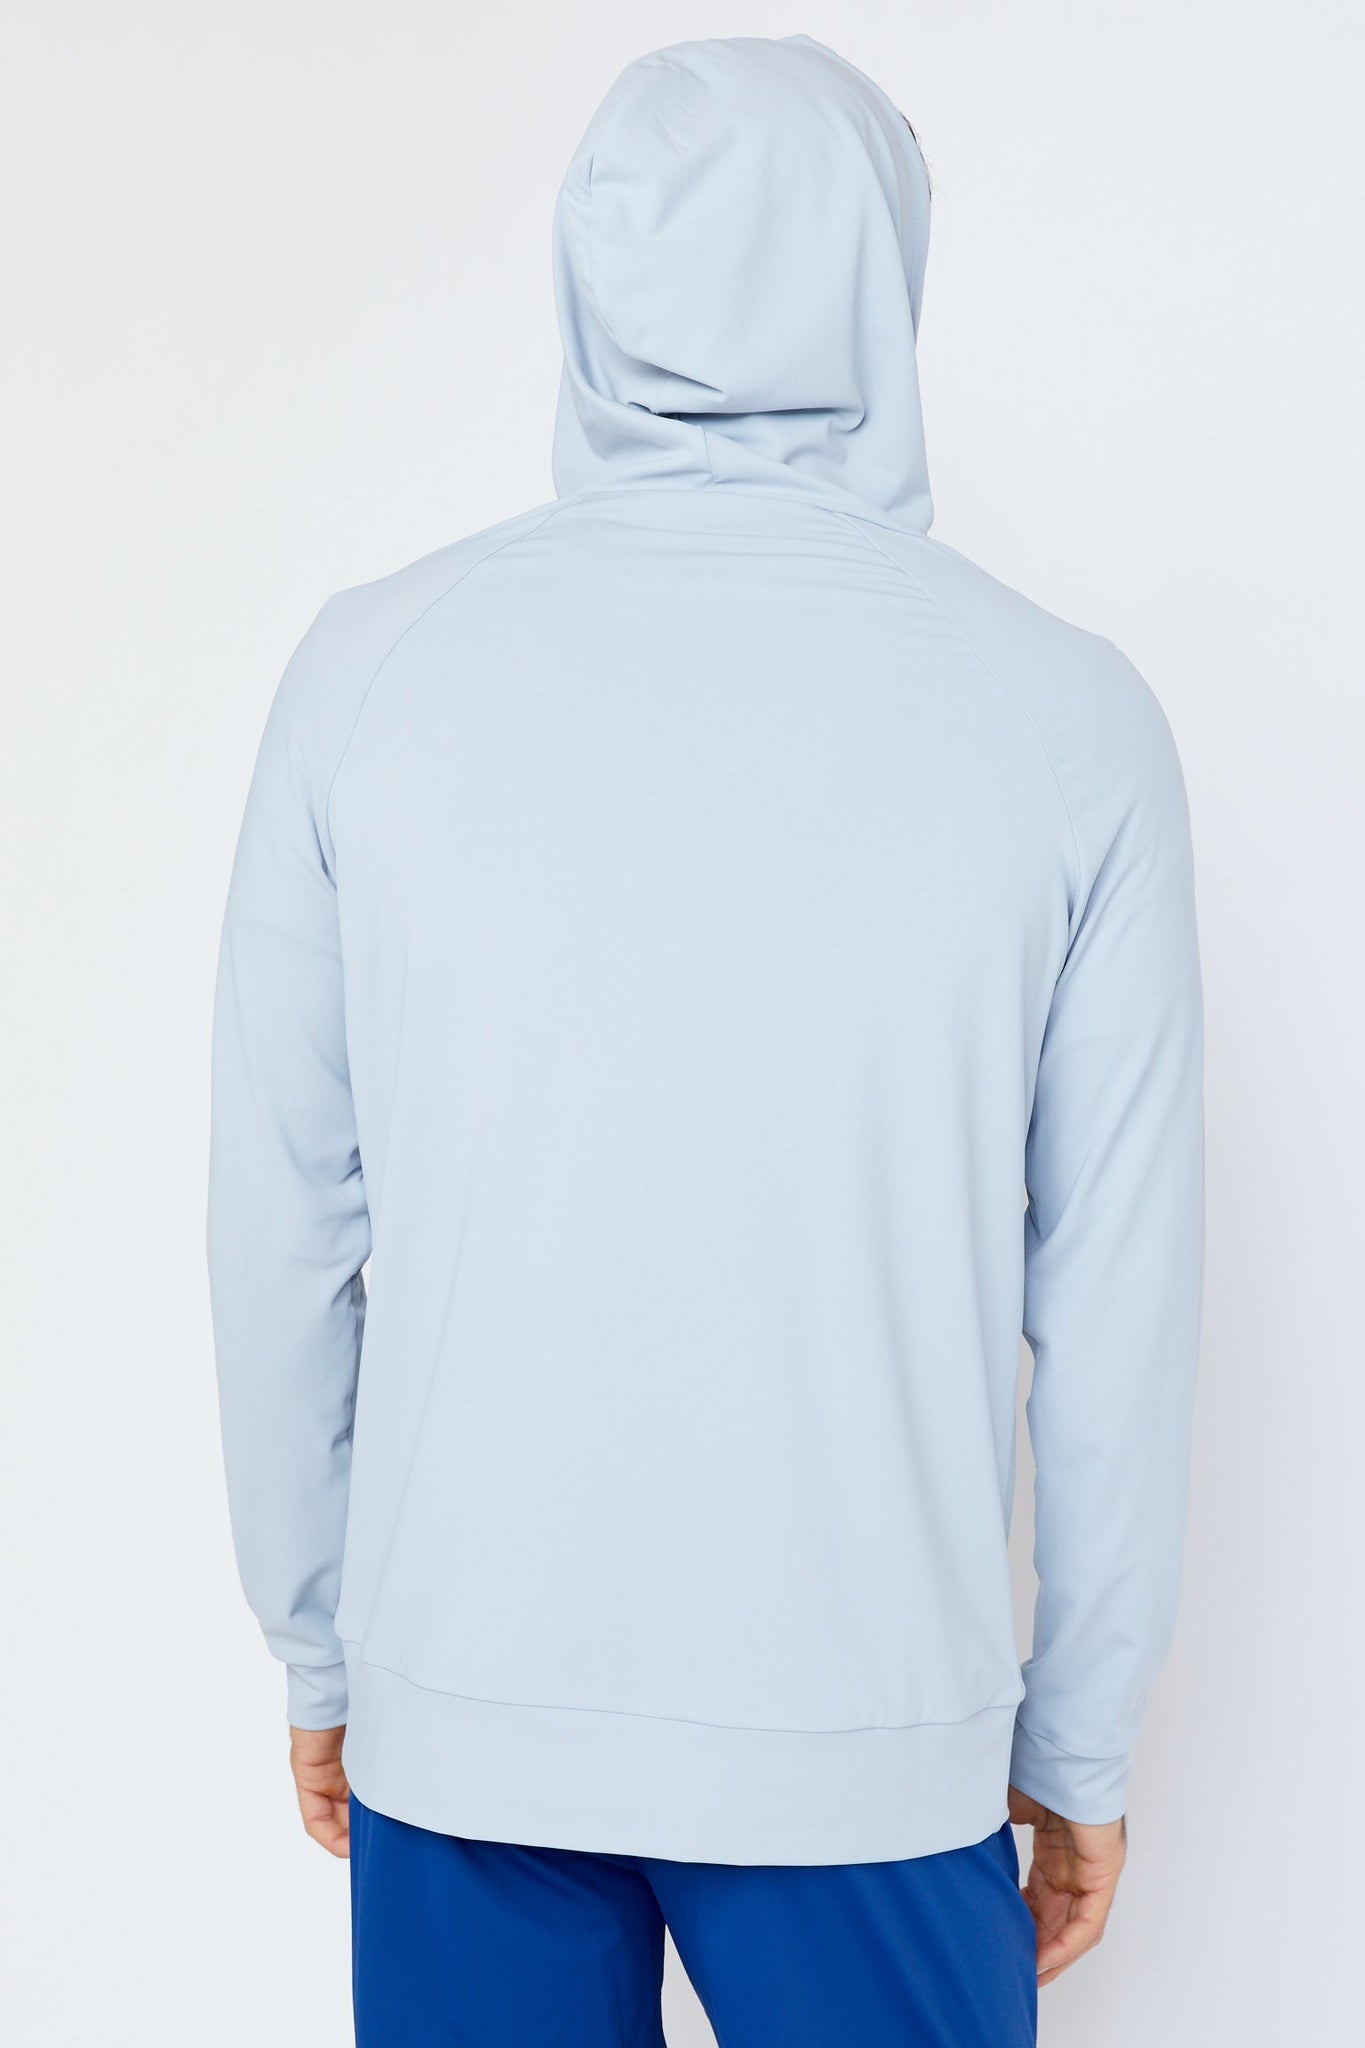 Image of the larkin hoodie in glacier gray